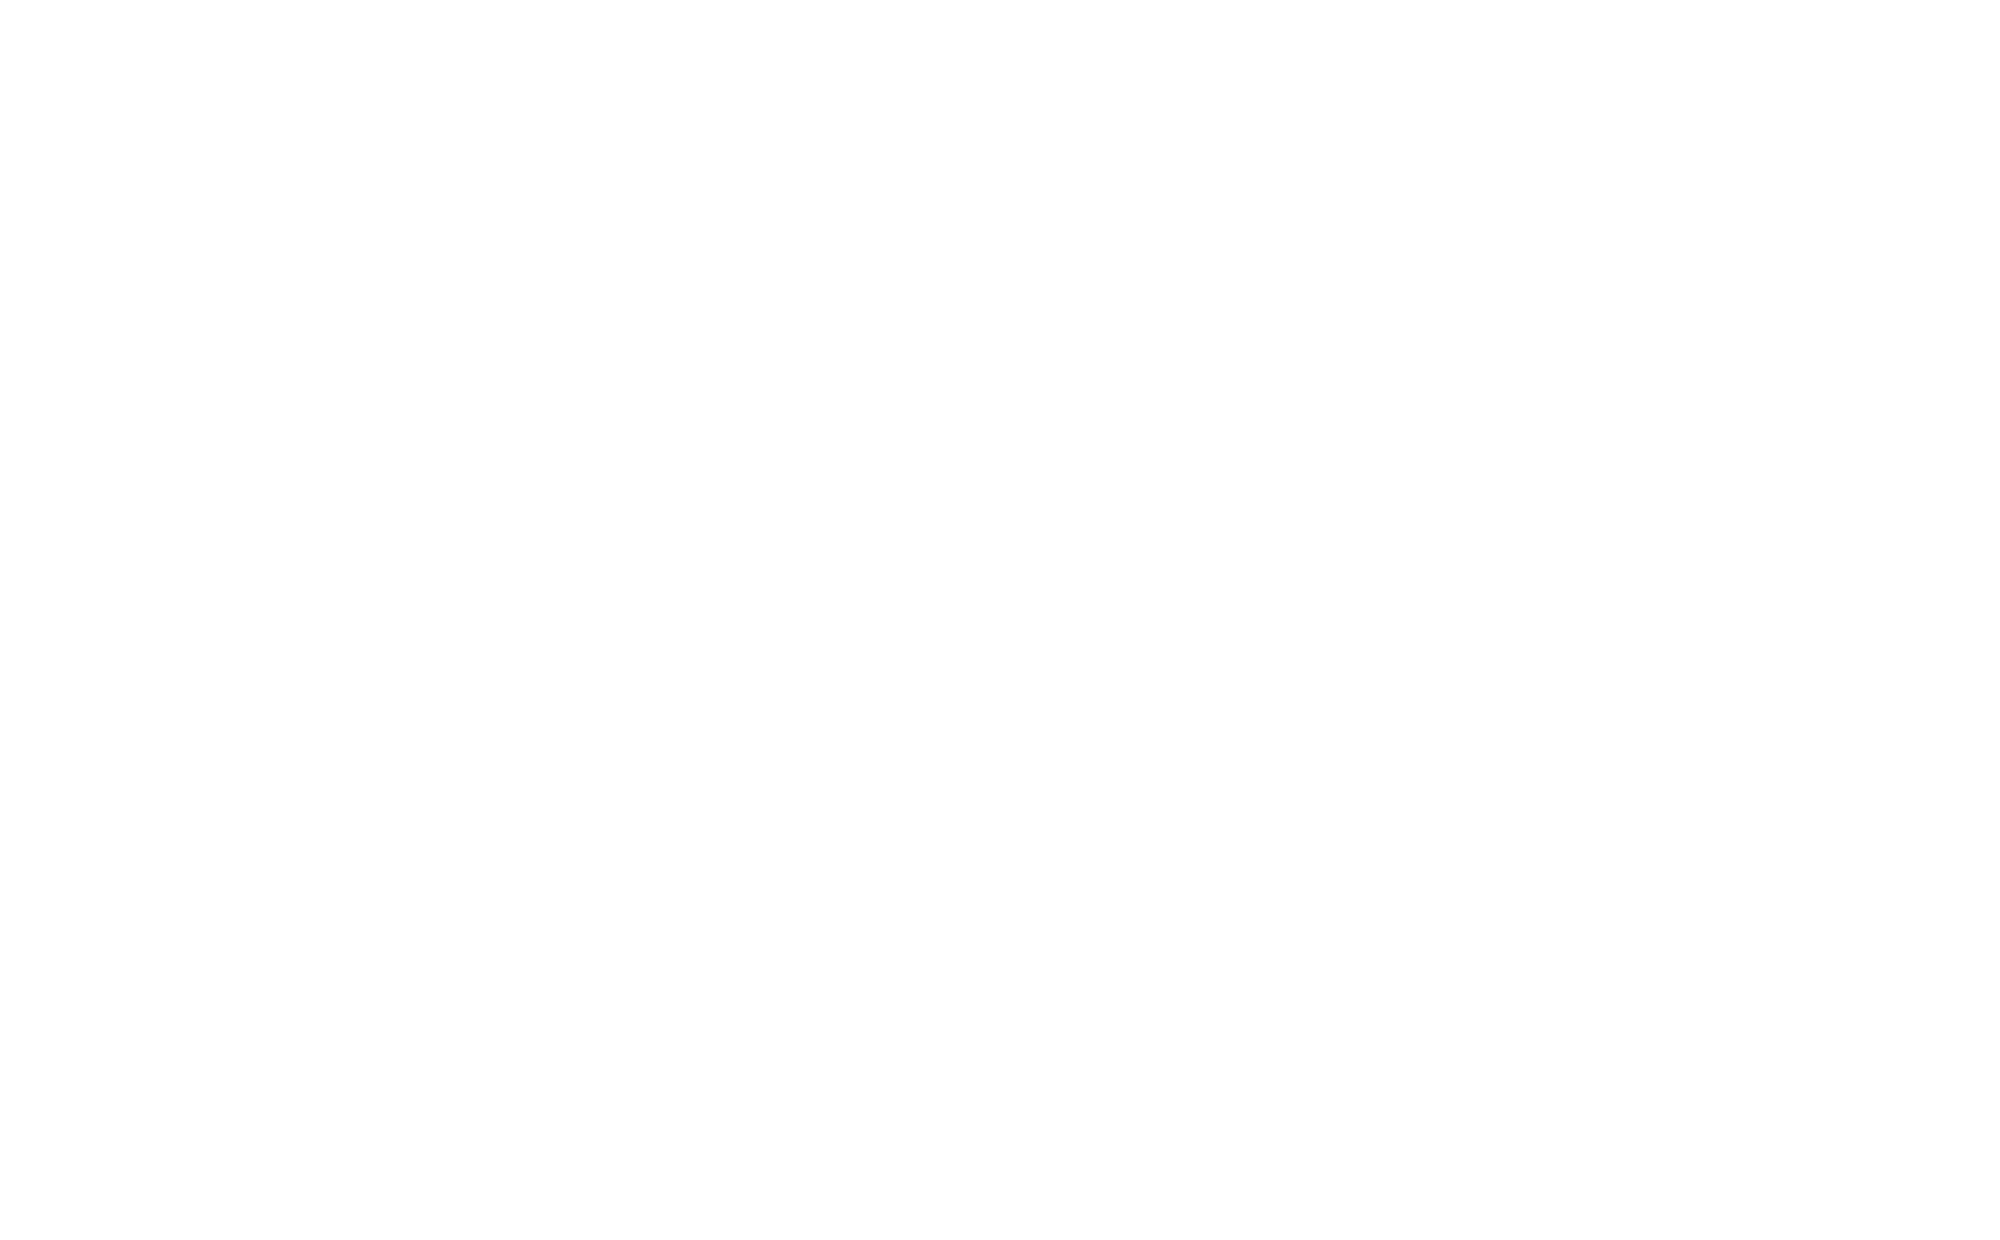 PEPITe - DATAmaestro's benefits : 1. Capture & store - 2. Structure & organize - 3. Clean - 4. Analyze - 5. Model - 6. Solve the issue - 7. Define optimization measures - 8. Implement - 9. Automate